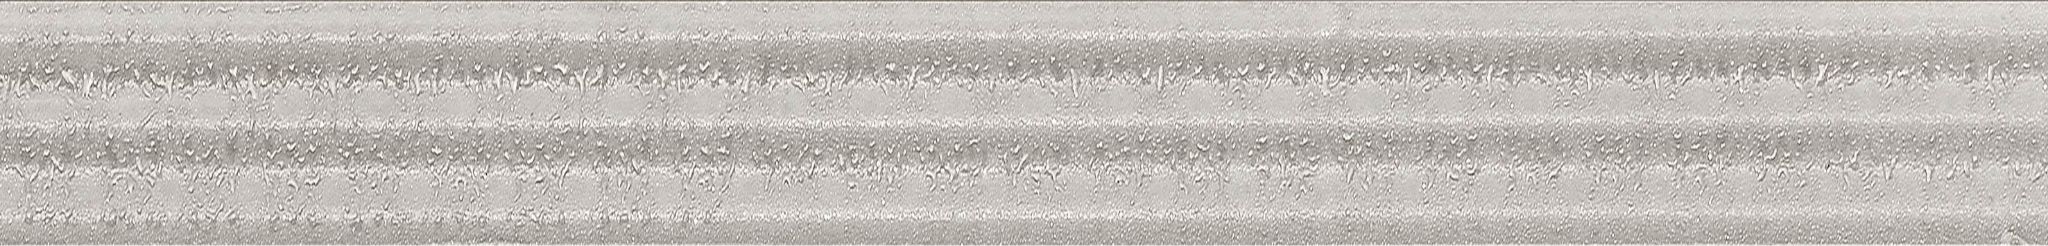 Бордюры Atlantic Tiles Godet Moldura Evase, цвет серый, поверхность глянцевая, квадрат, 25x250